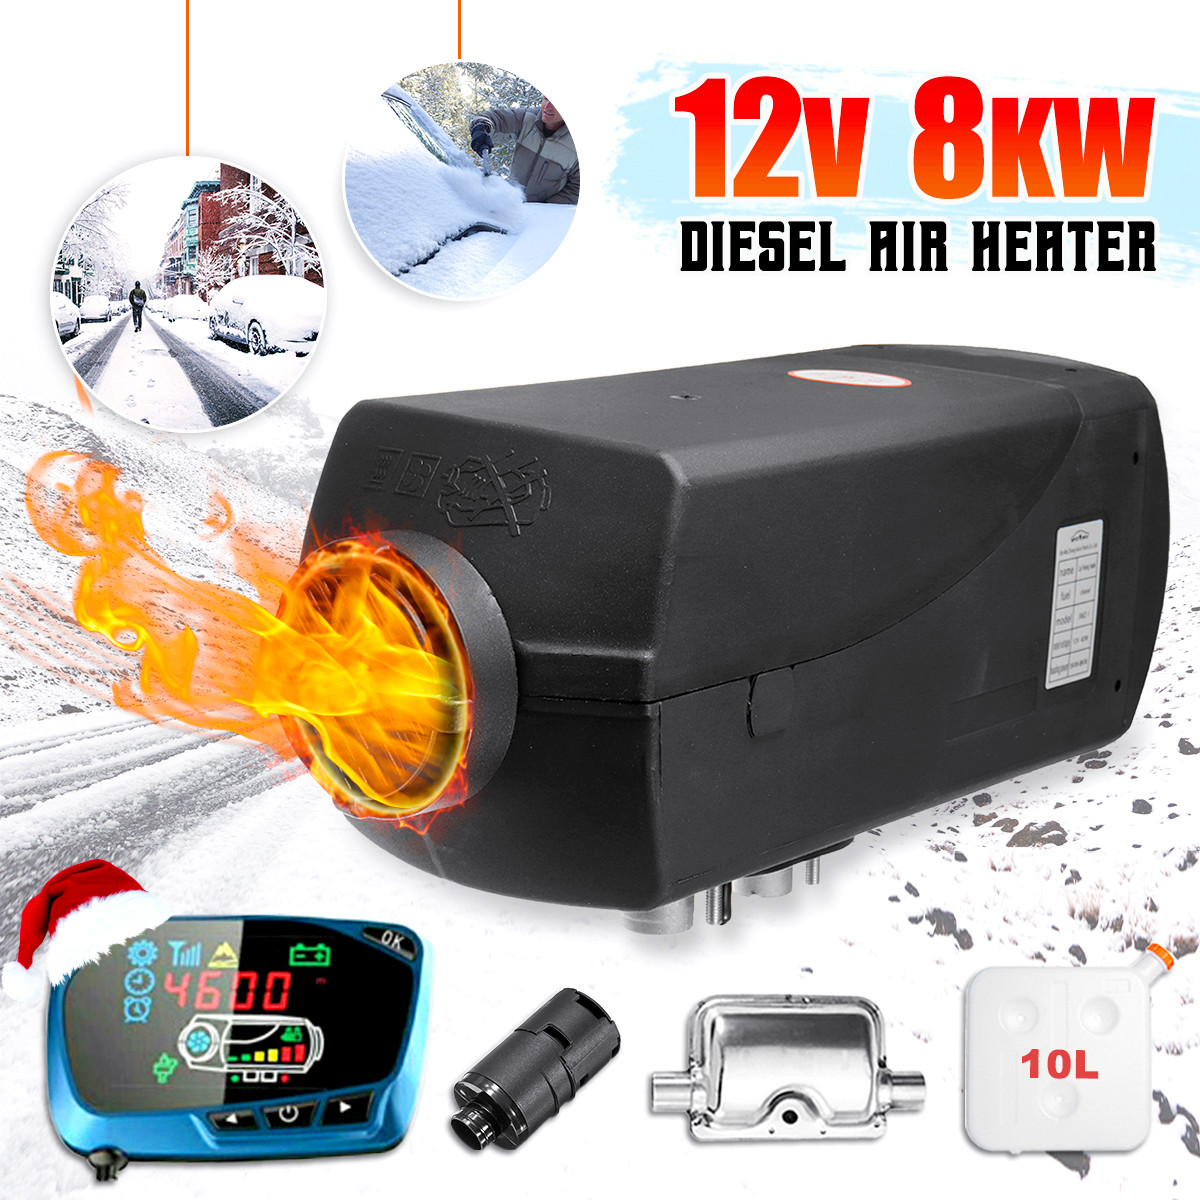 12V 8KW Diesel Air Heater Diesel Fuel Parking Heater LCD Switch Warming Equipment Kit 10L Tank